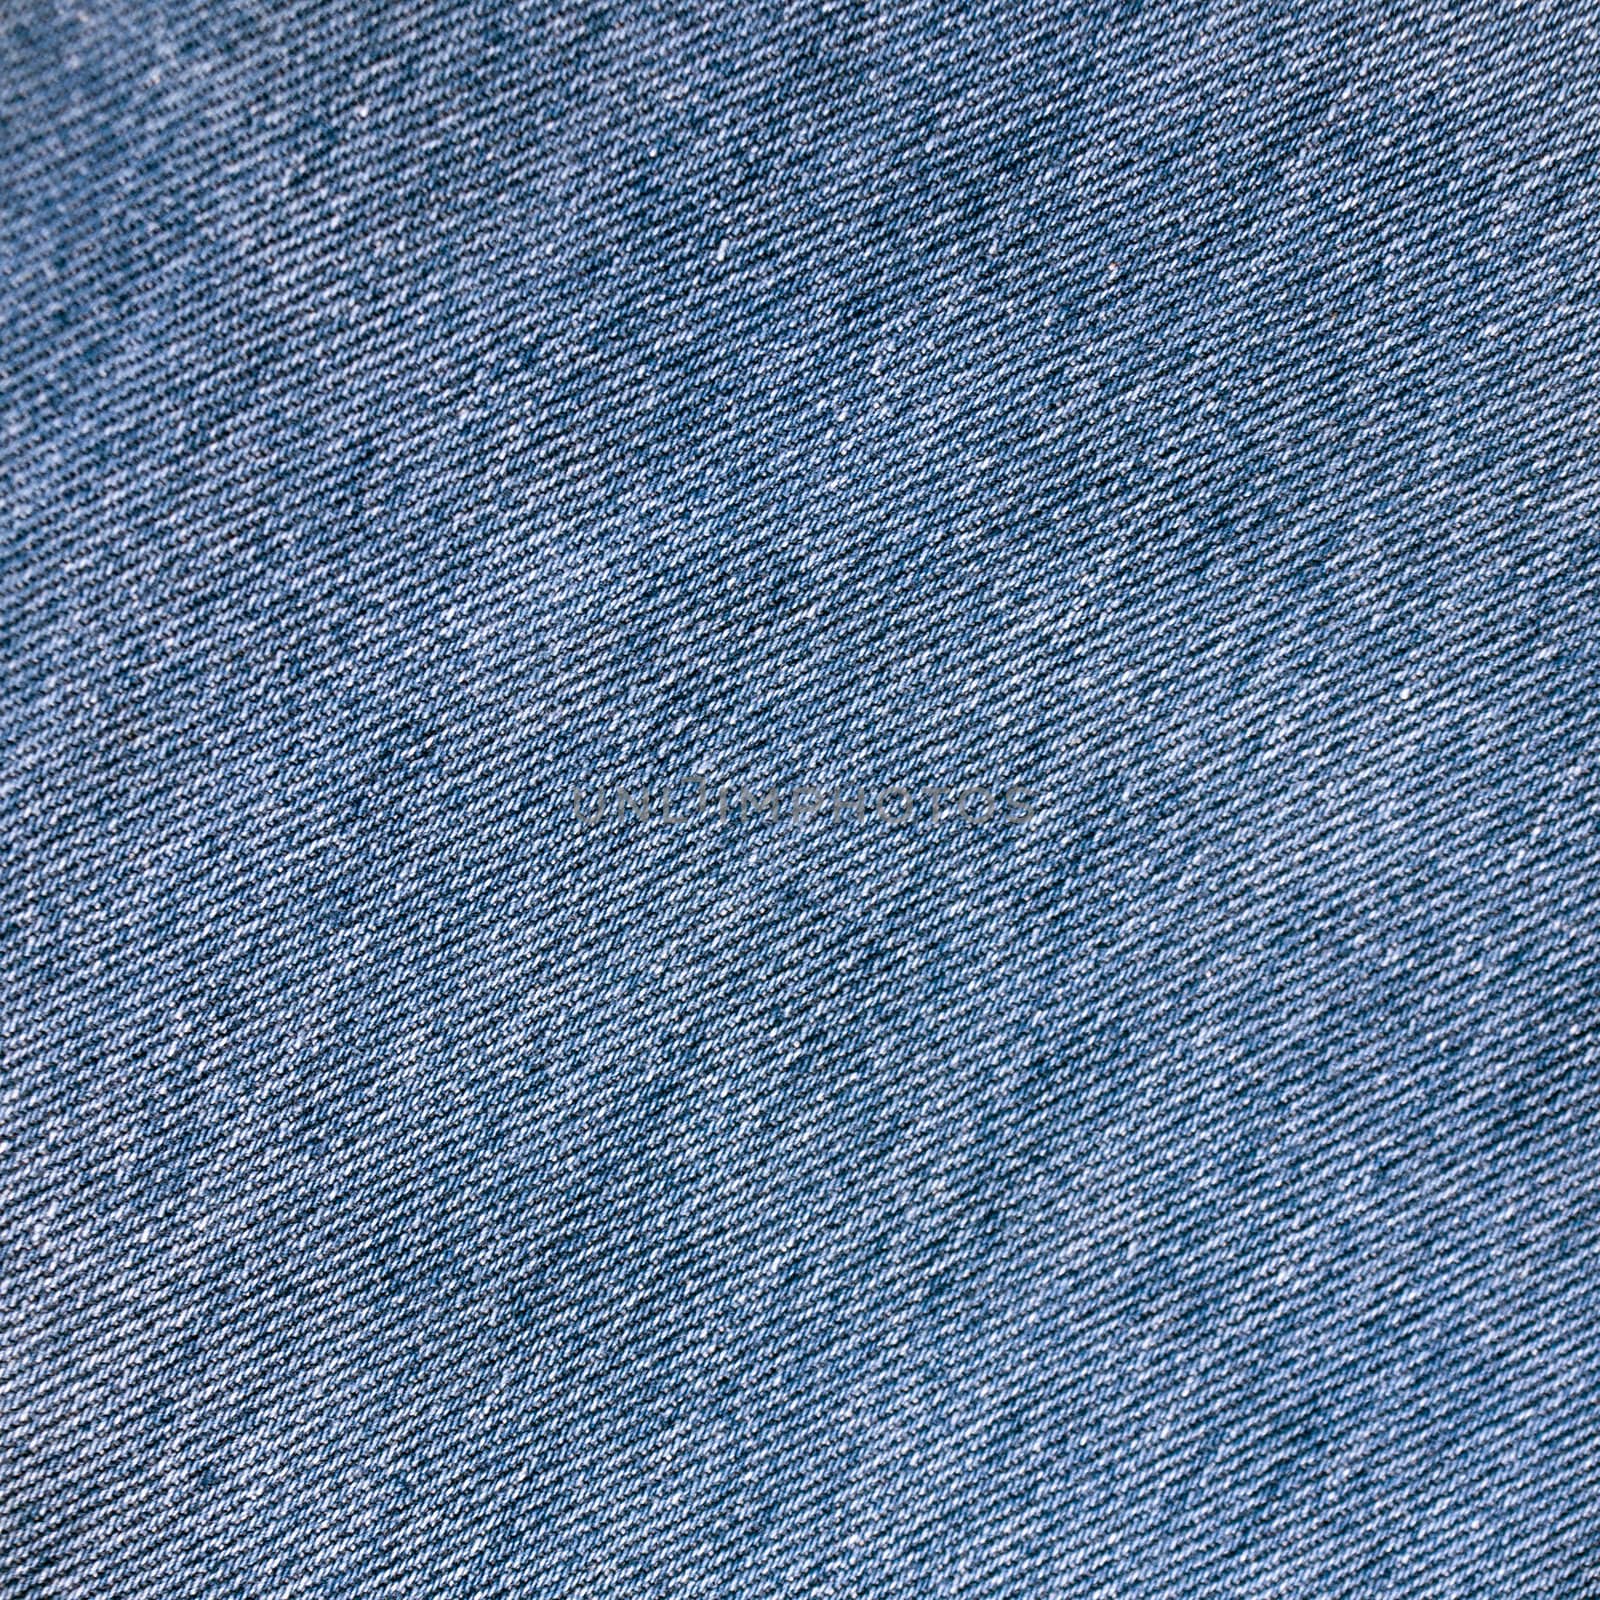 blue denim jeans texture, background by jakgree